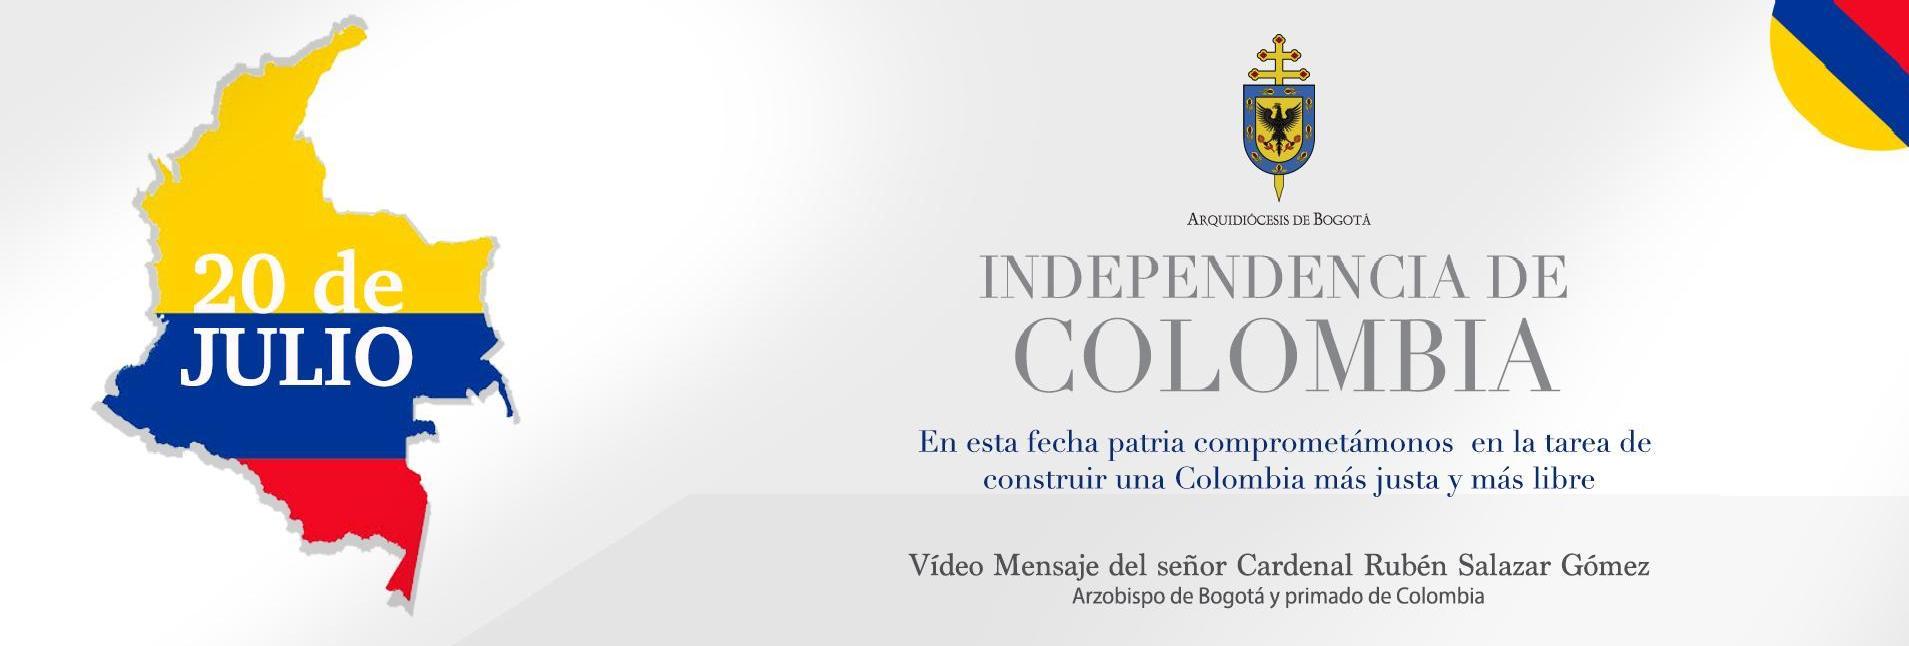 https://arquimedia.s3.amazonaws.com/63/noticias/banner--independencia-de--colombia-2019jpg-1-1909jpg.jpg